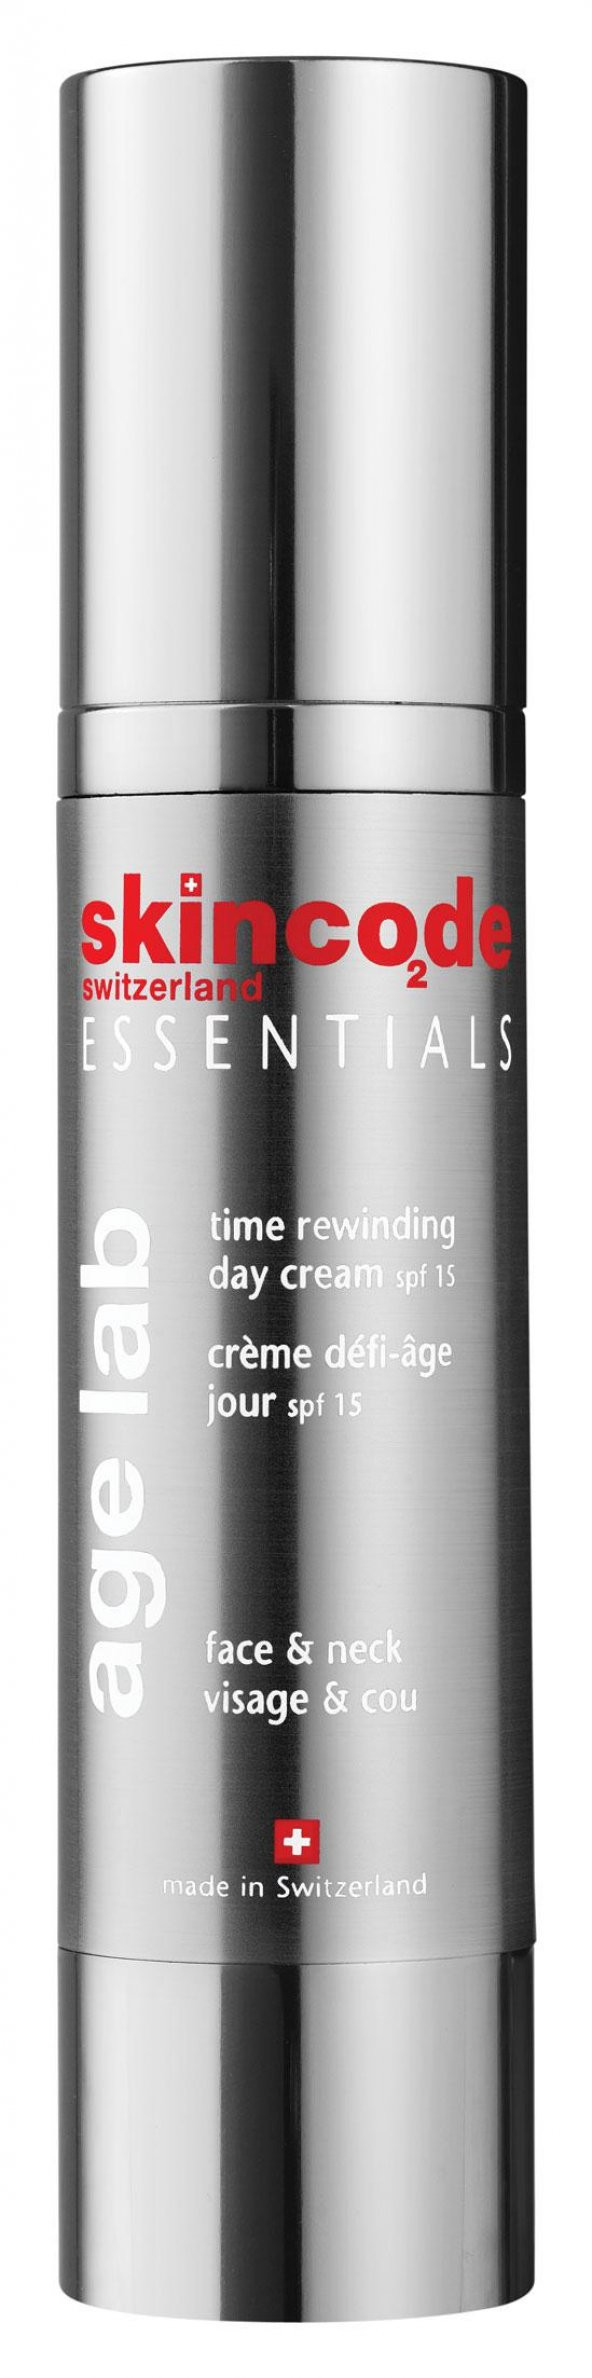 Skincode Time Rewinding Day Cream 50 ml